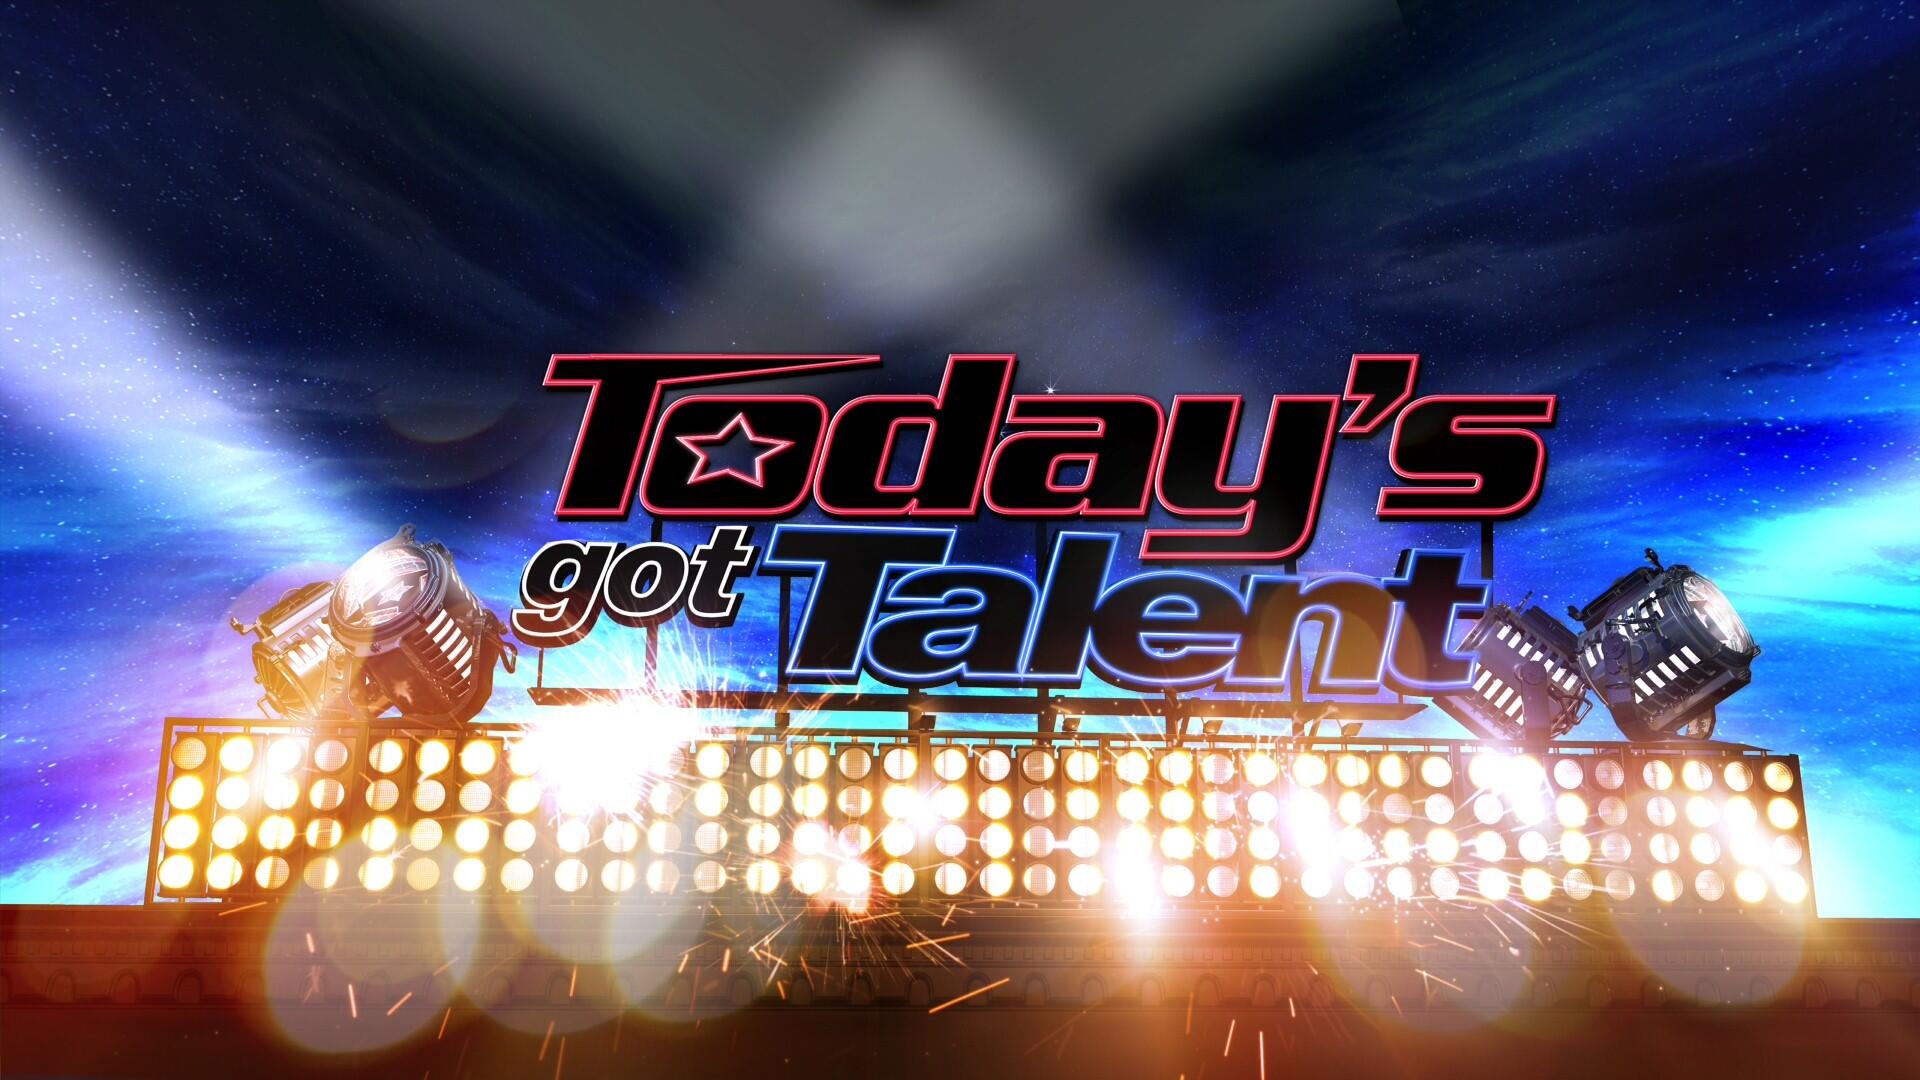 America's Got Talent on Twitter: 